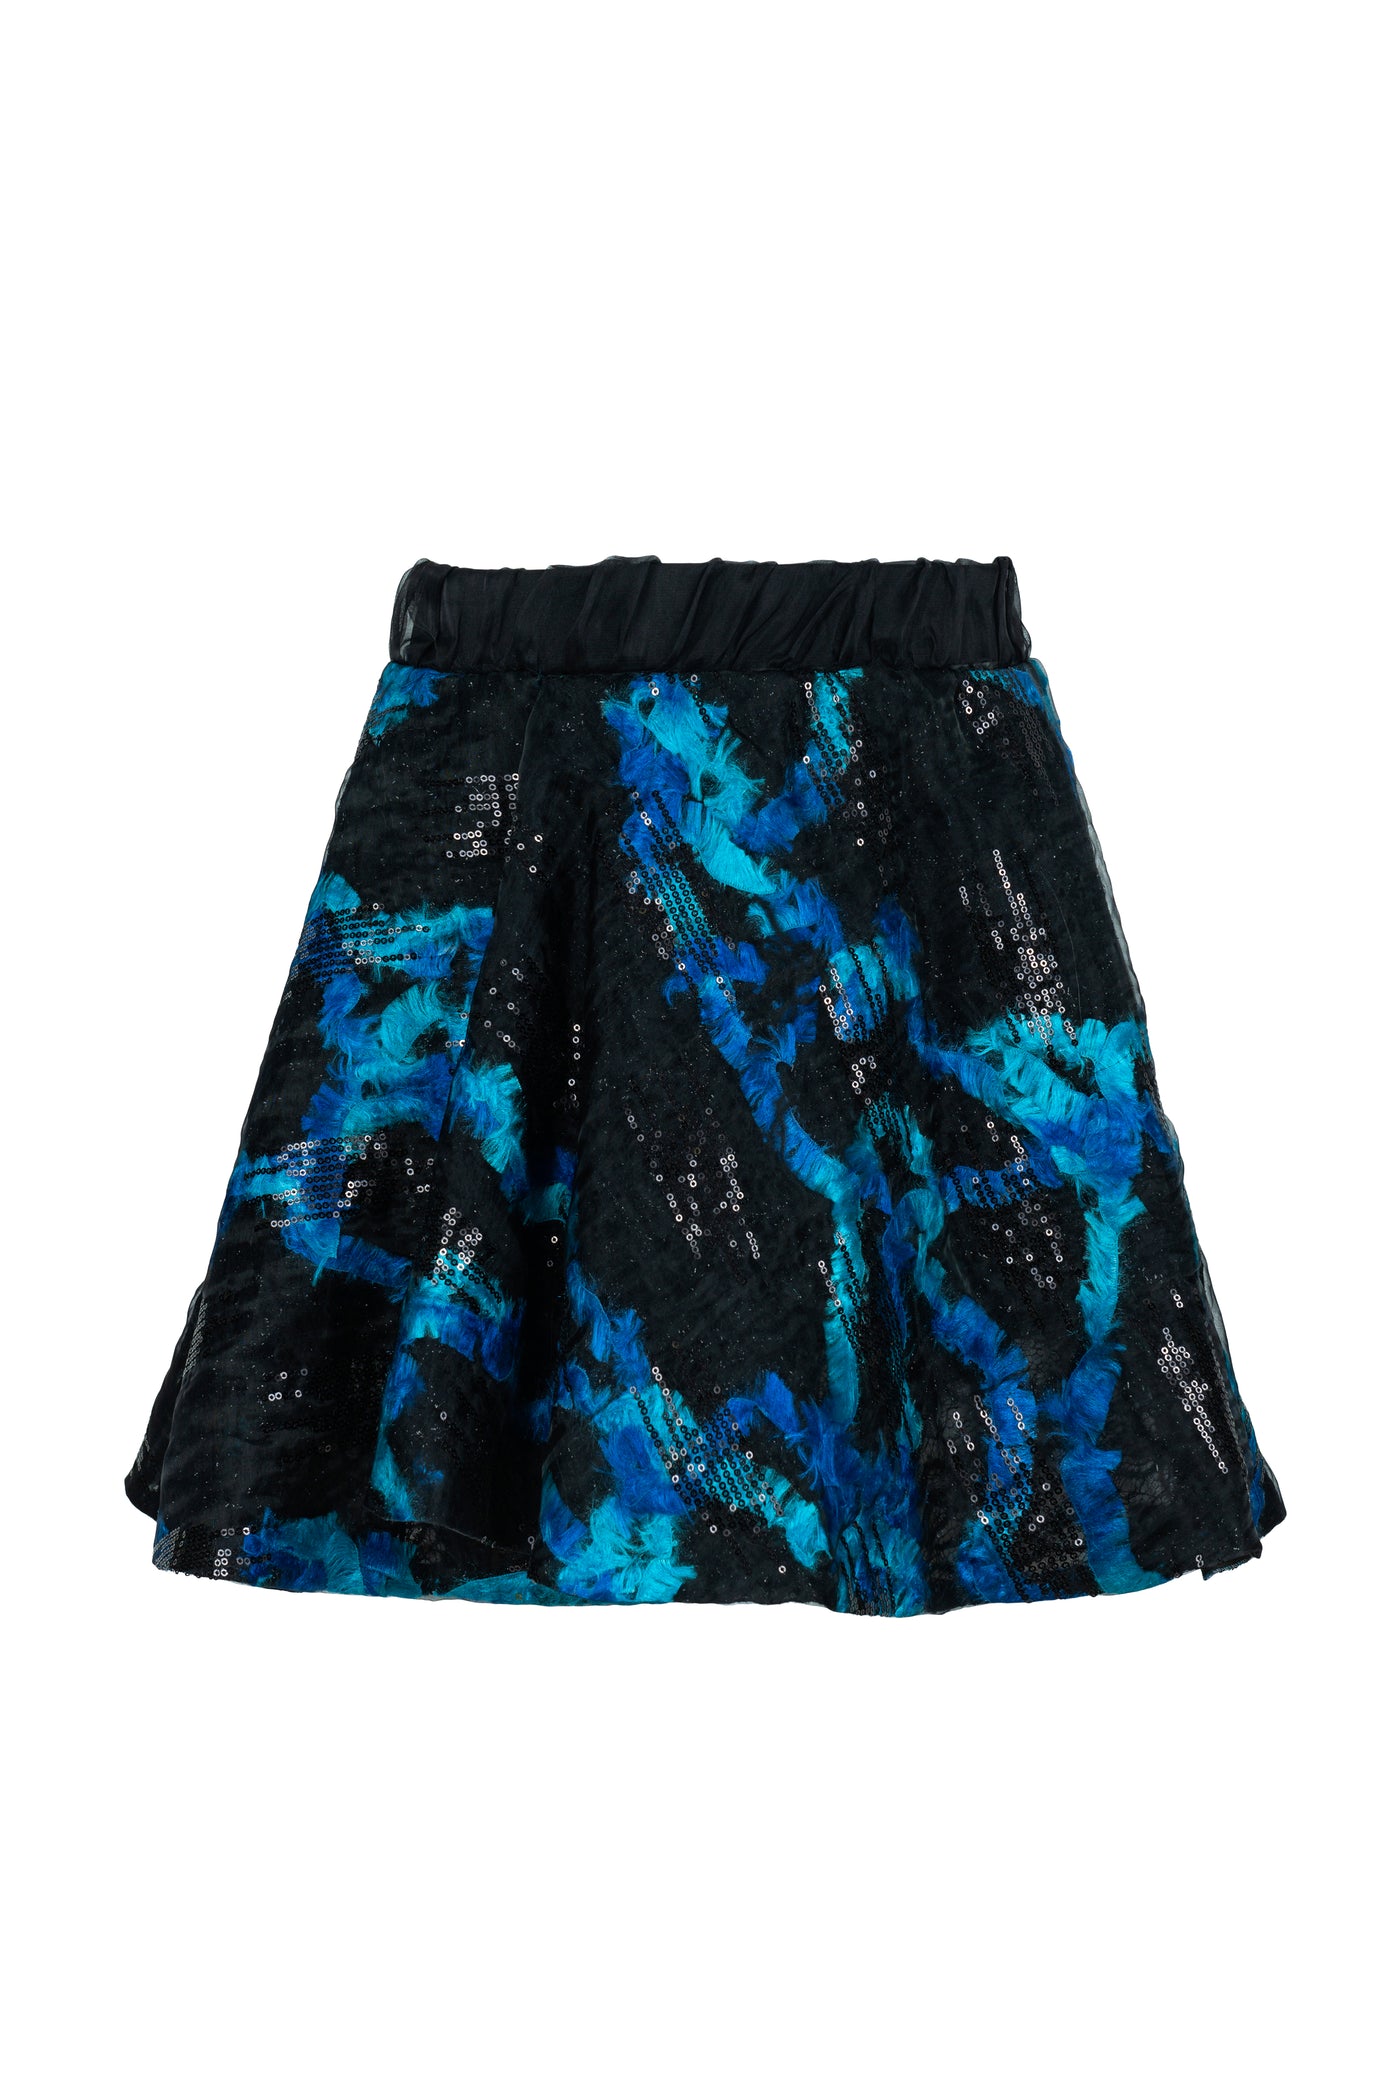 Blue and Black Evasé Skirt